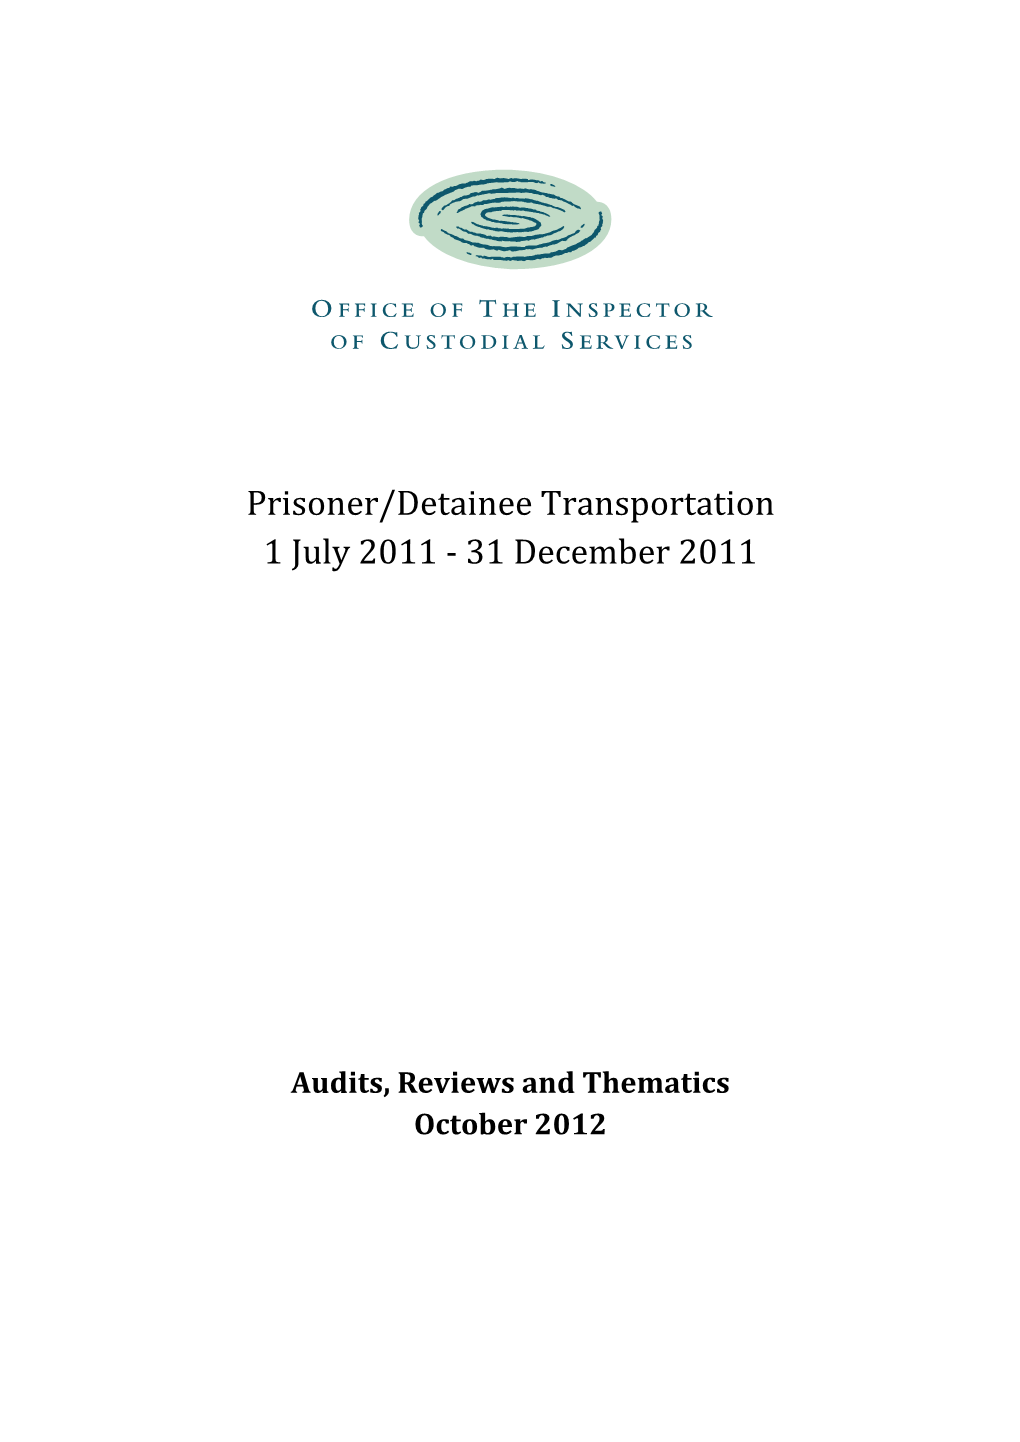 Prisoner/Detainee Transportation 1 July 2011 - 31 December 2011